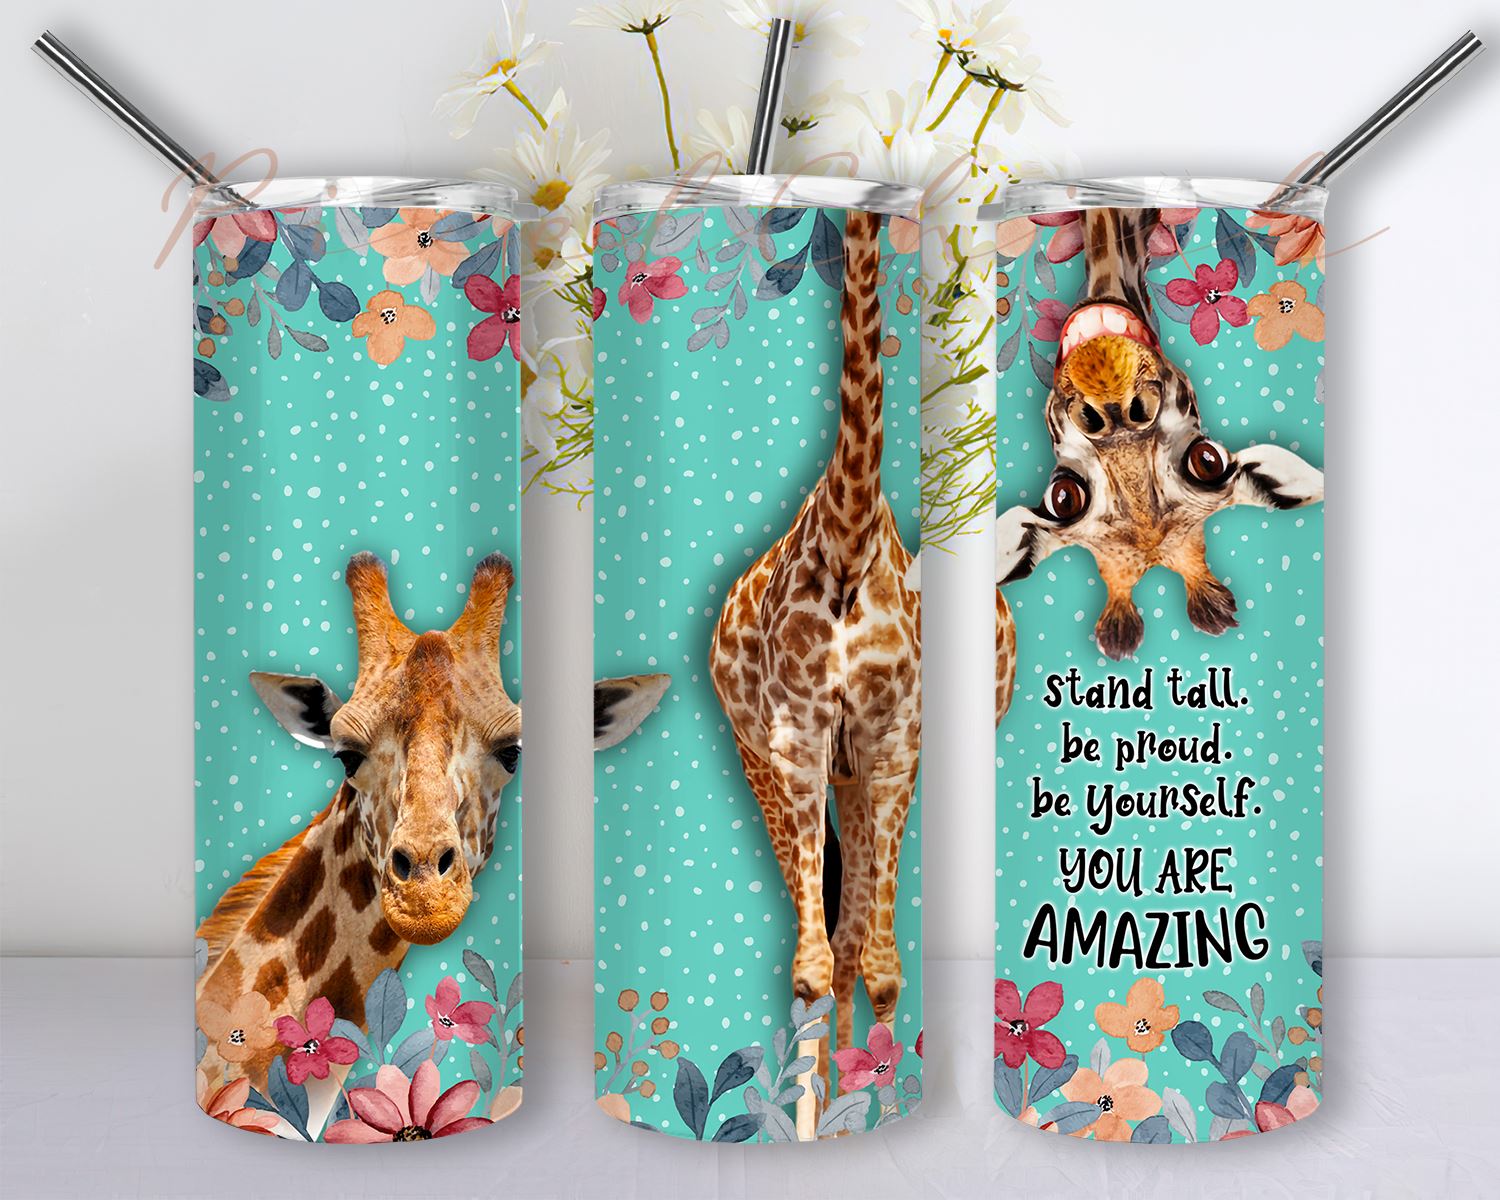 Giraffe tumbler wrap design